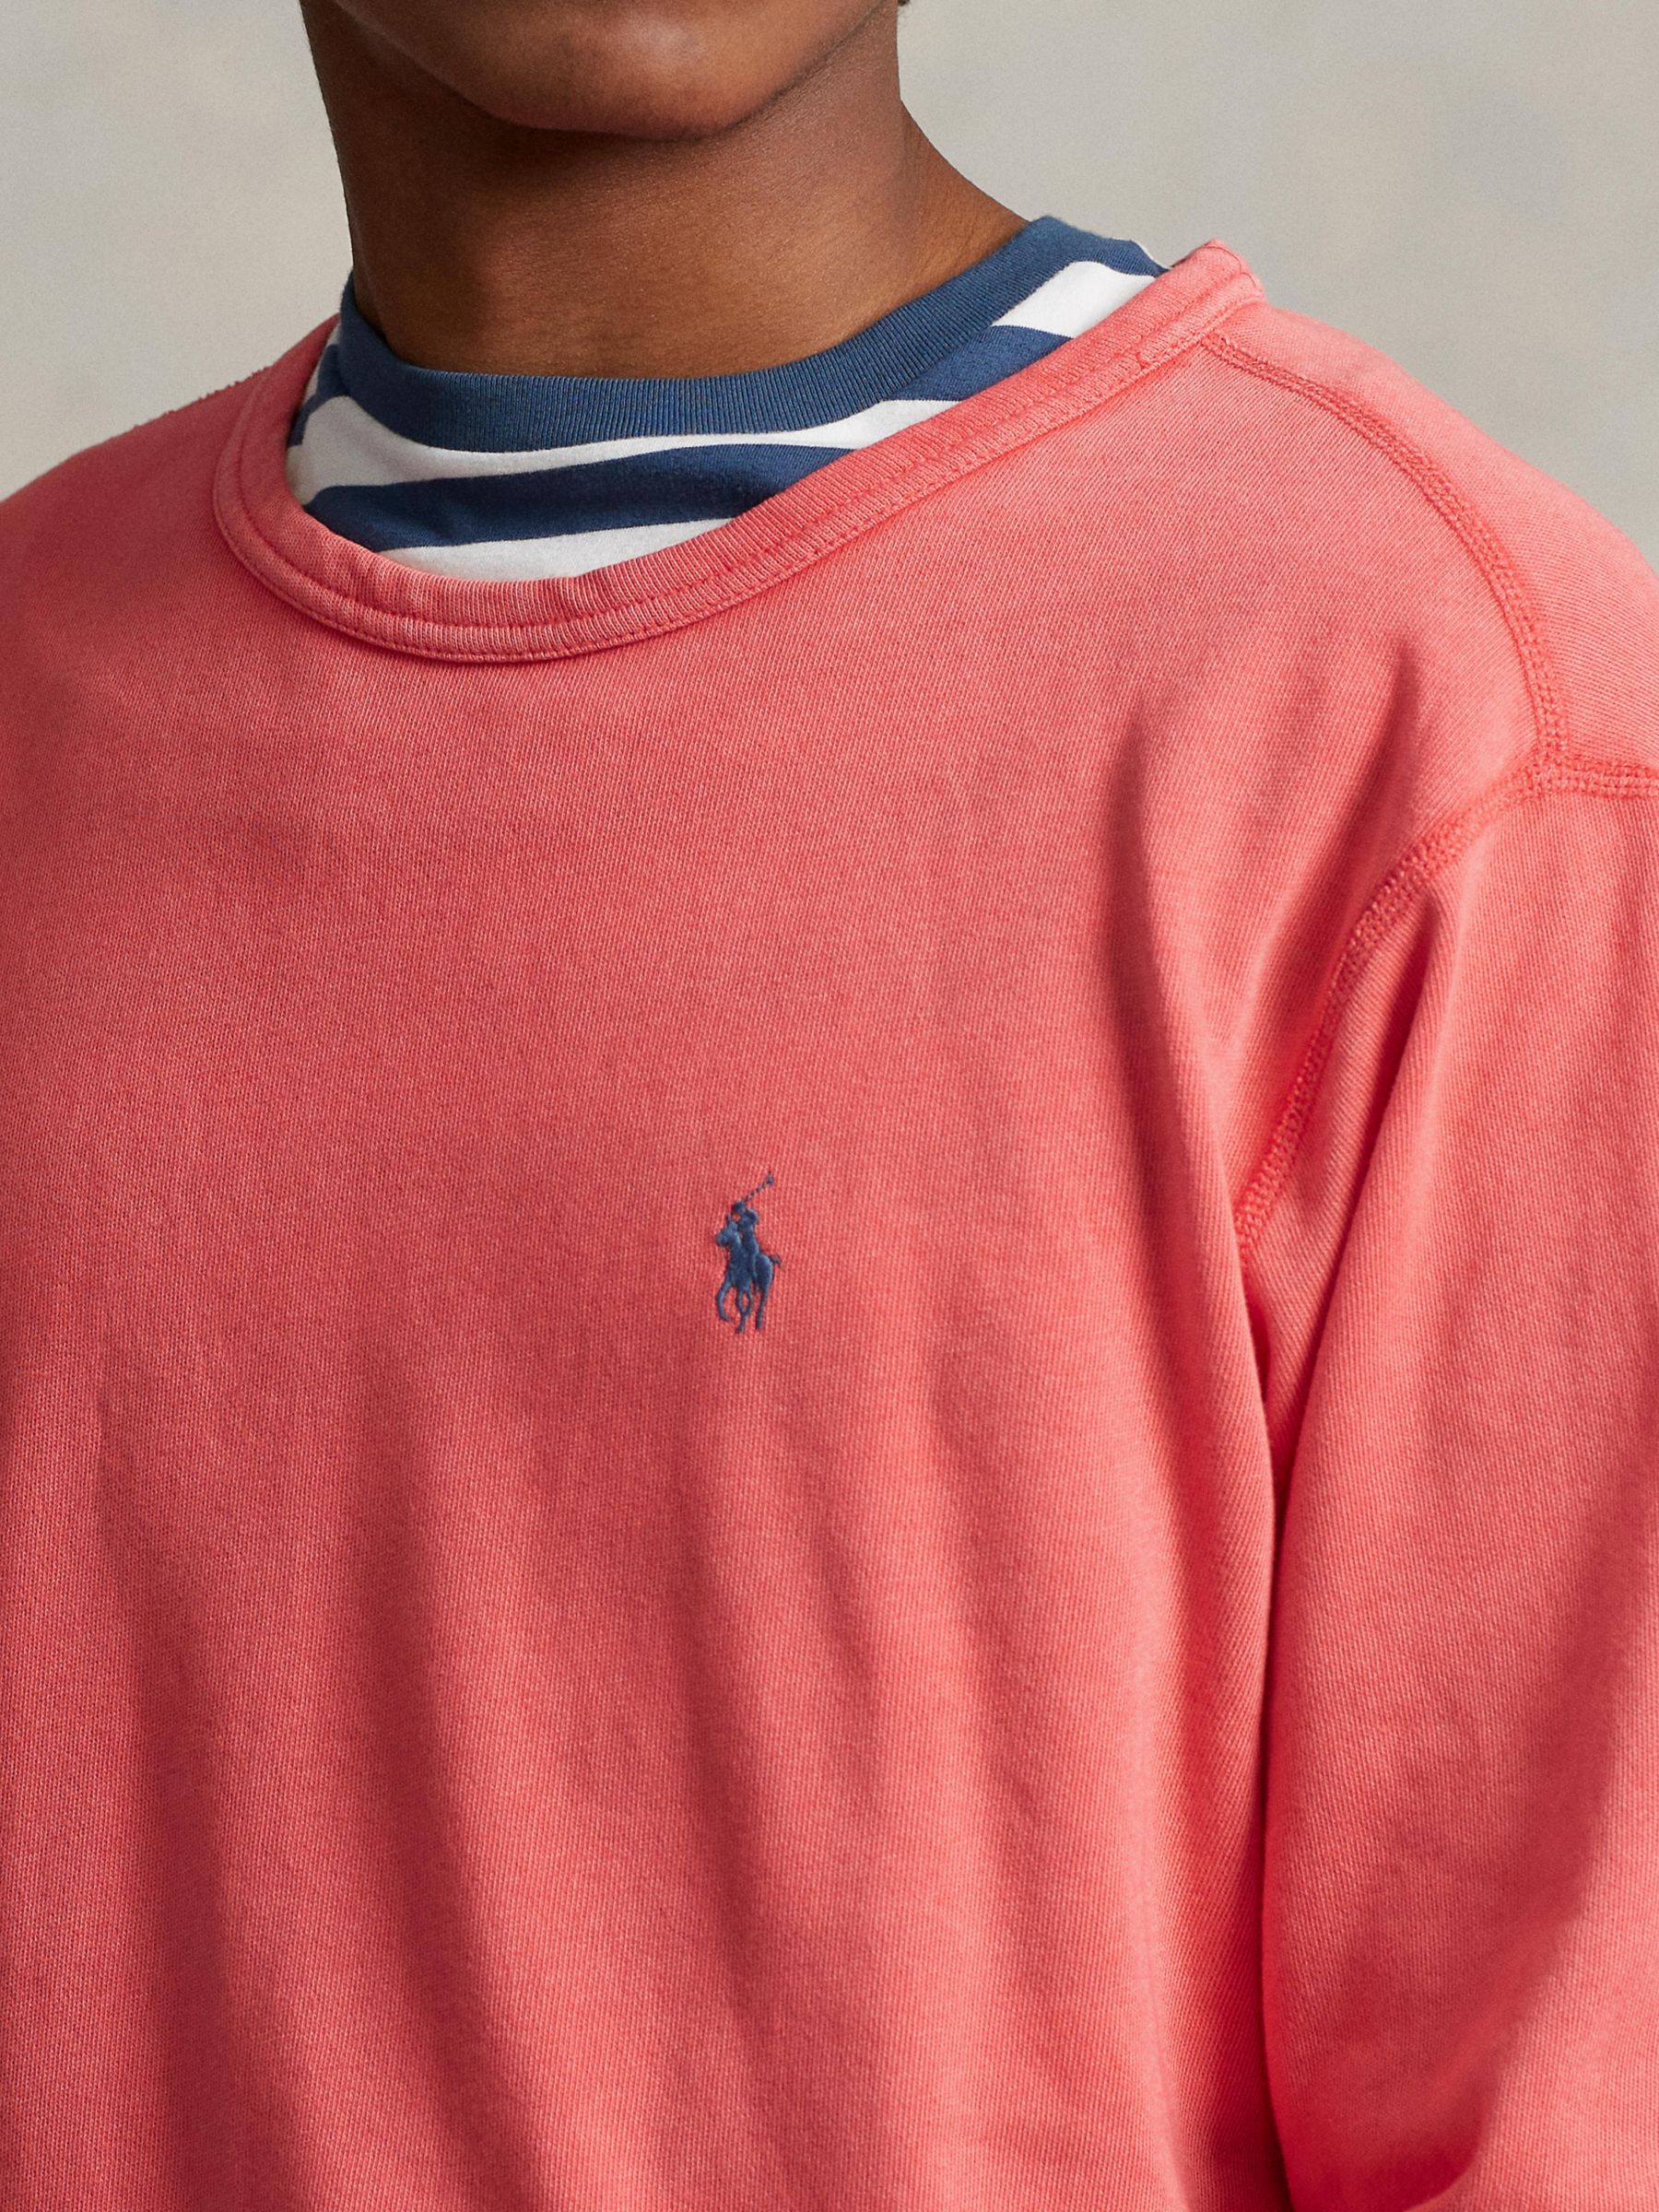 Polo Ralph Lauren Sweatshirt, Red Reef at John Lewis & Partners